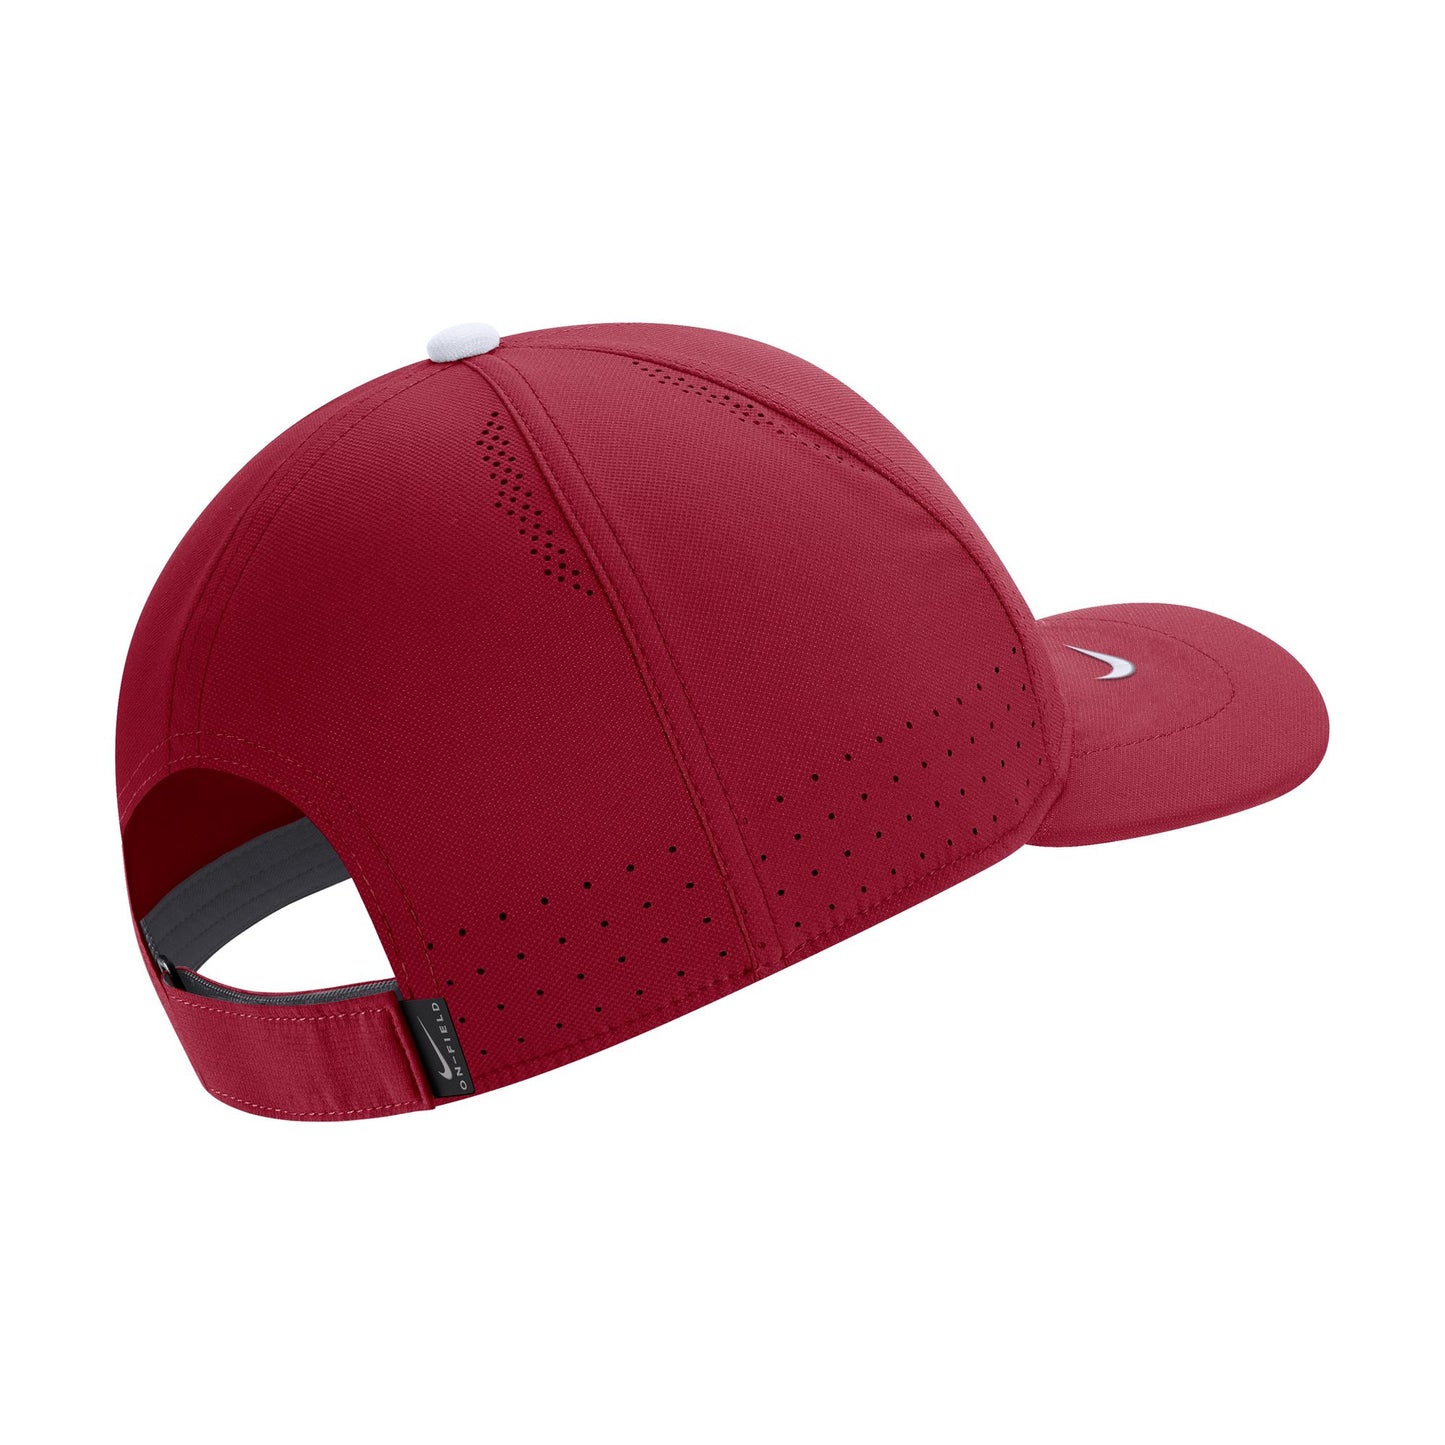 Nike Men's Alabama Crimson Tide AeroBill Swoosh Adjustable Classic 99 Football Sideline Hat